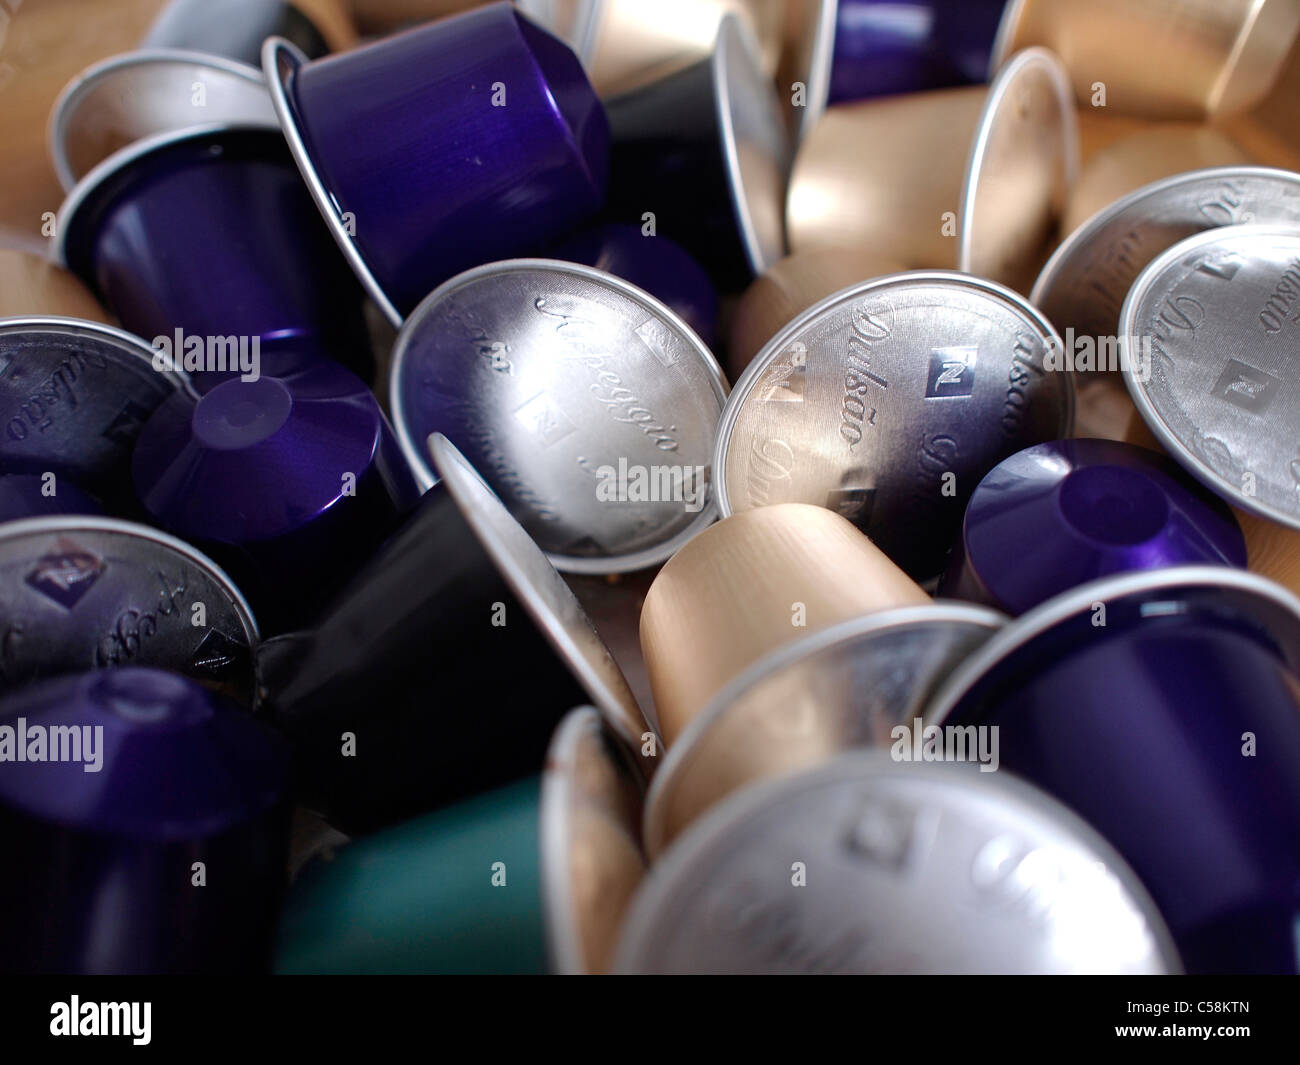 Nespresso coffee capsules cups Stock Photo